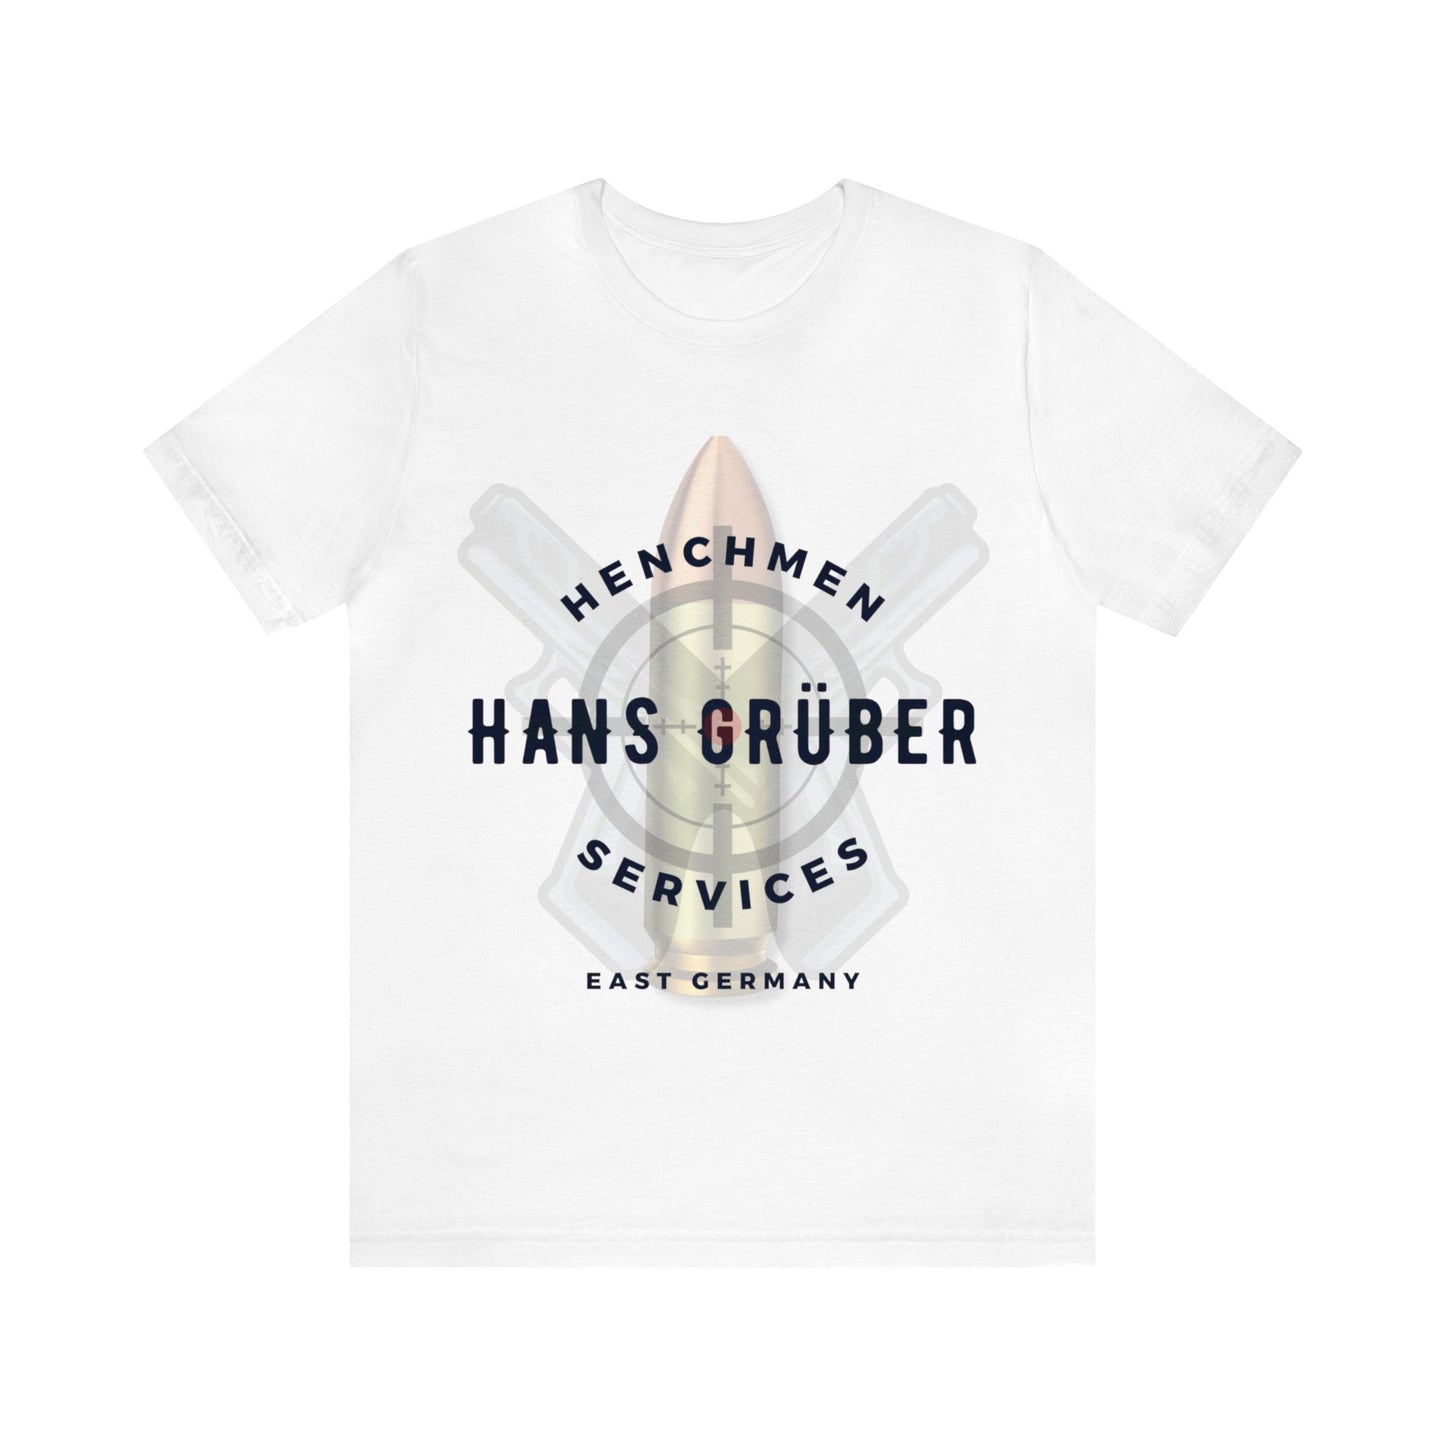 HANS GRUBER